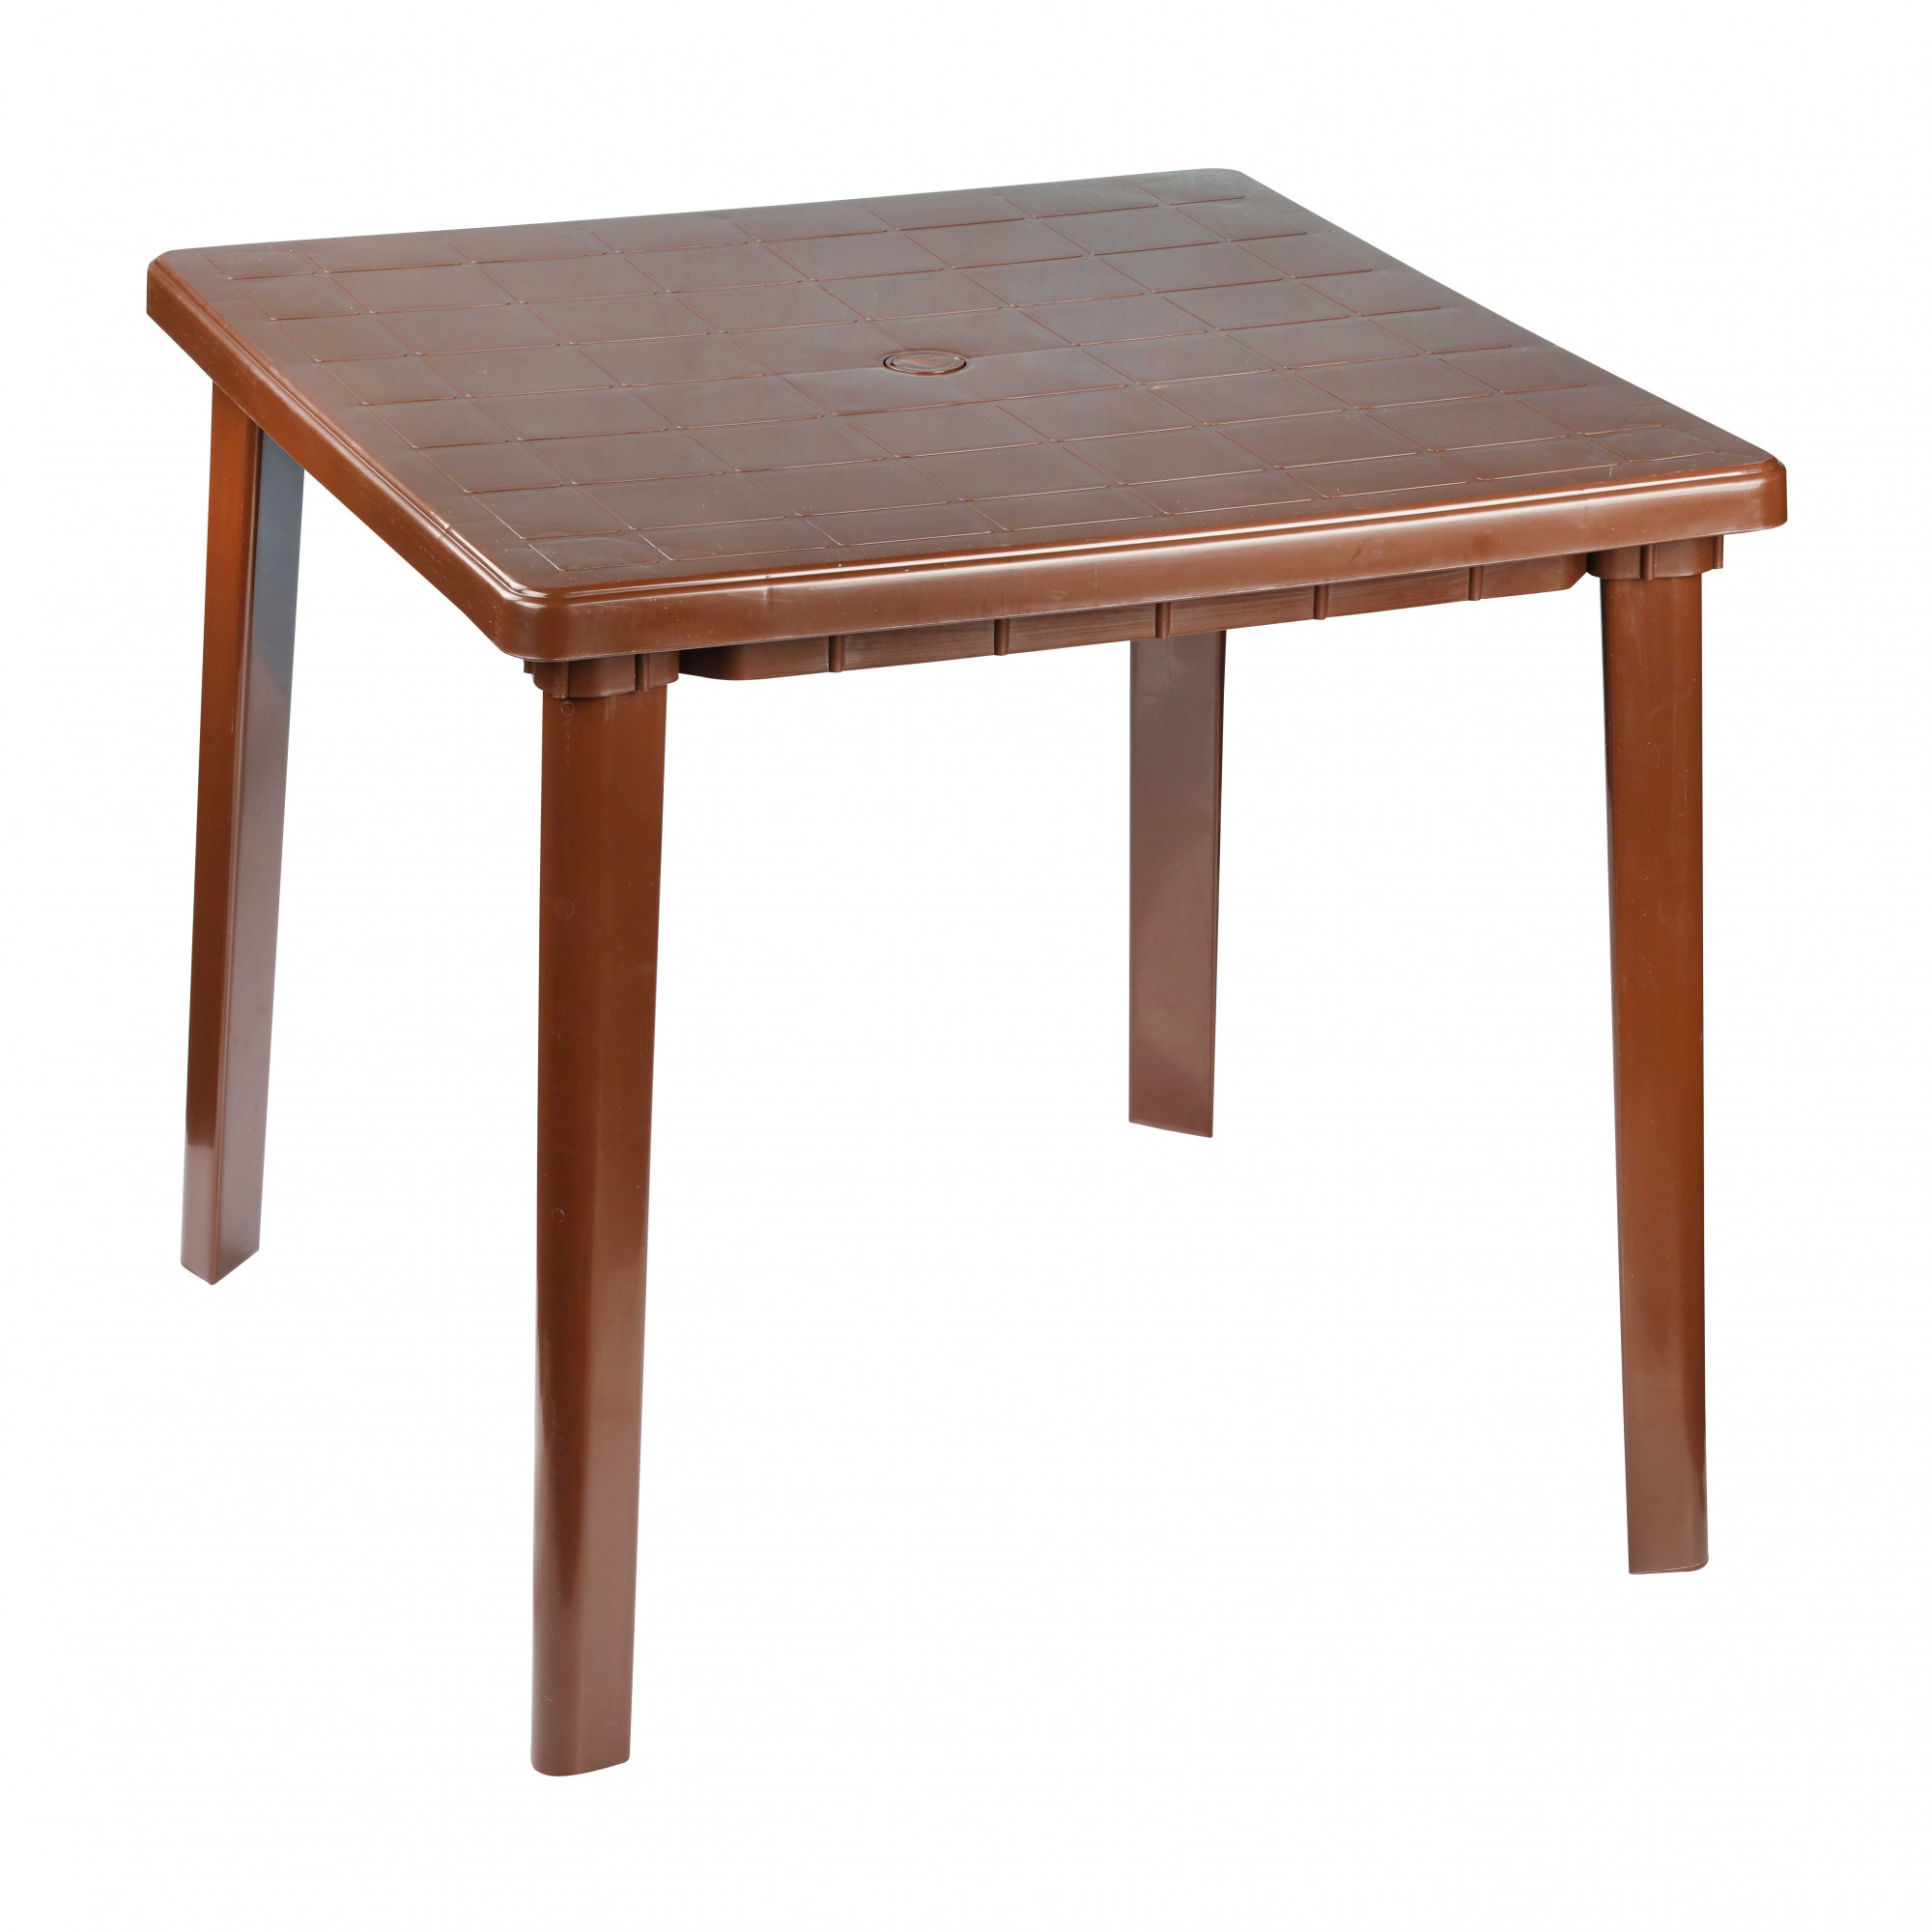 Садовый стол Альтернатива М8153 коричневый (800х800х740мм)